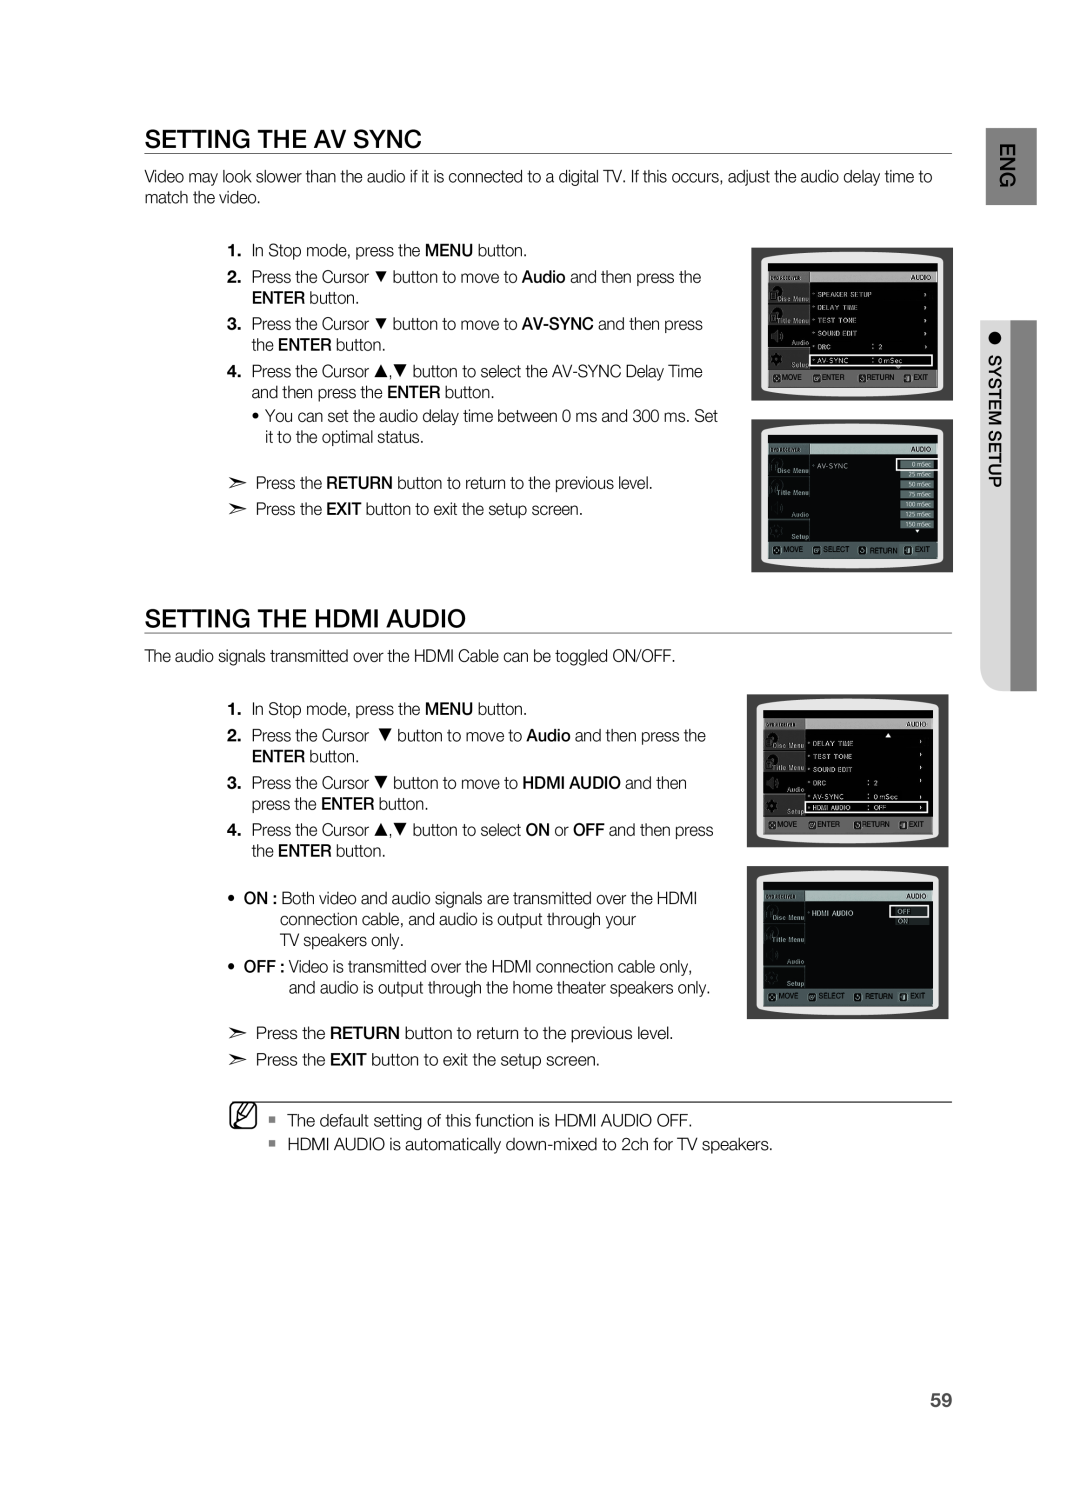 Samsung HT-TZ312 manual Setting the AV SYNC, Setting the HDMI Audio 